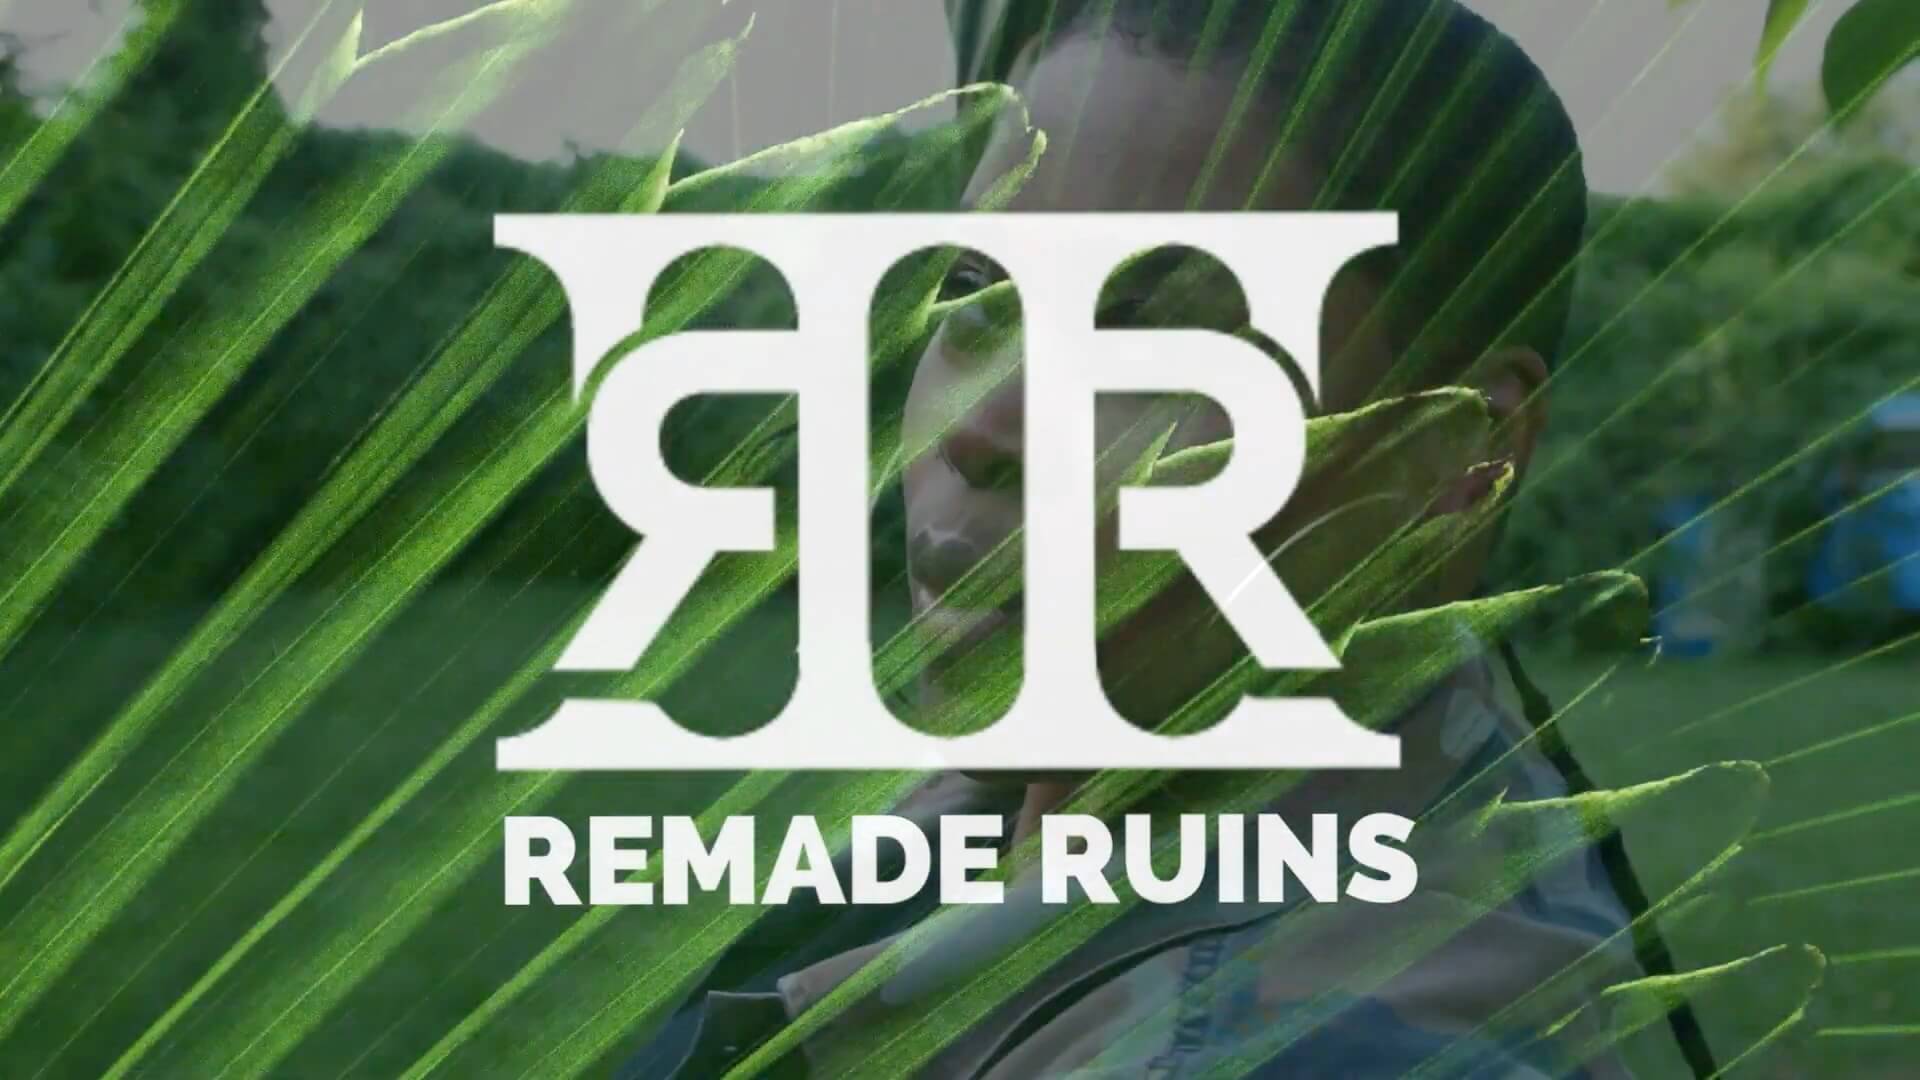 zaire-remade-ruins-logo-screen-1